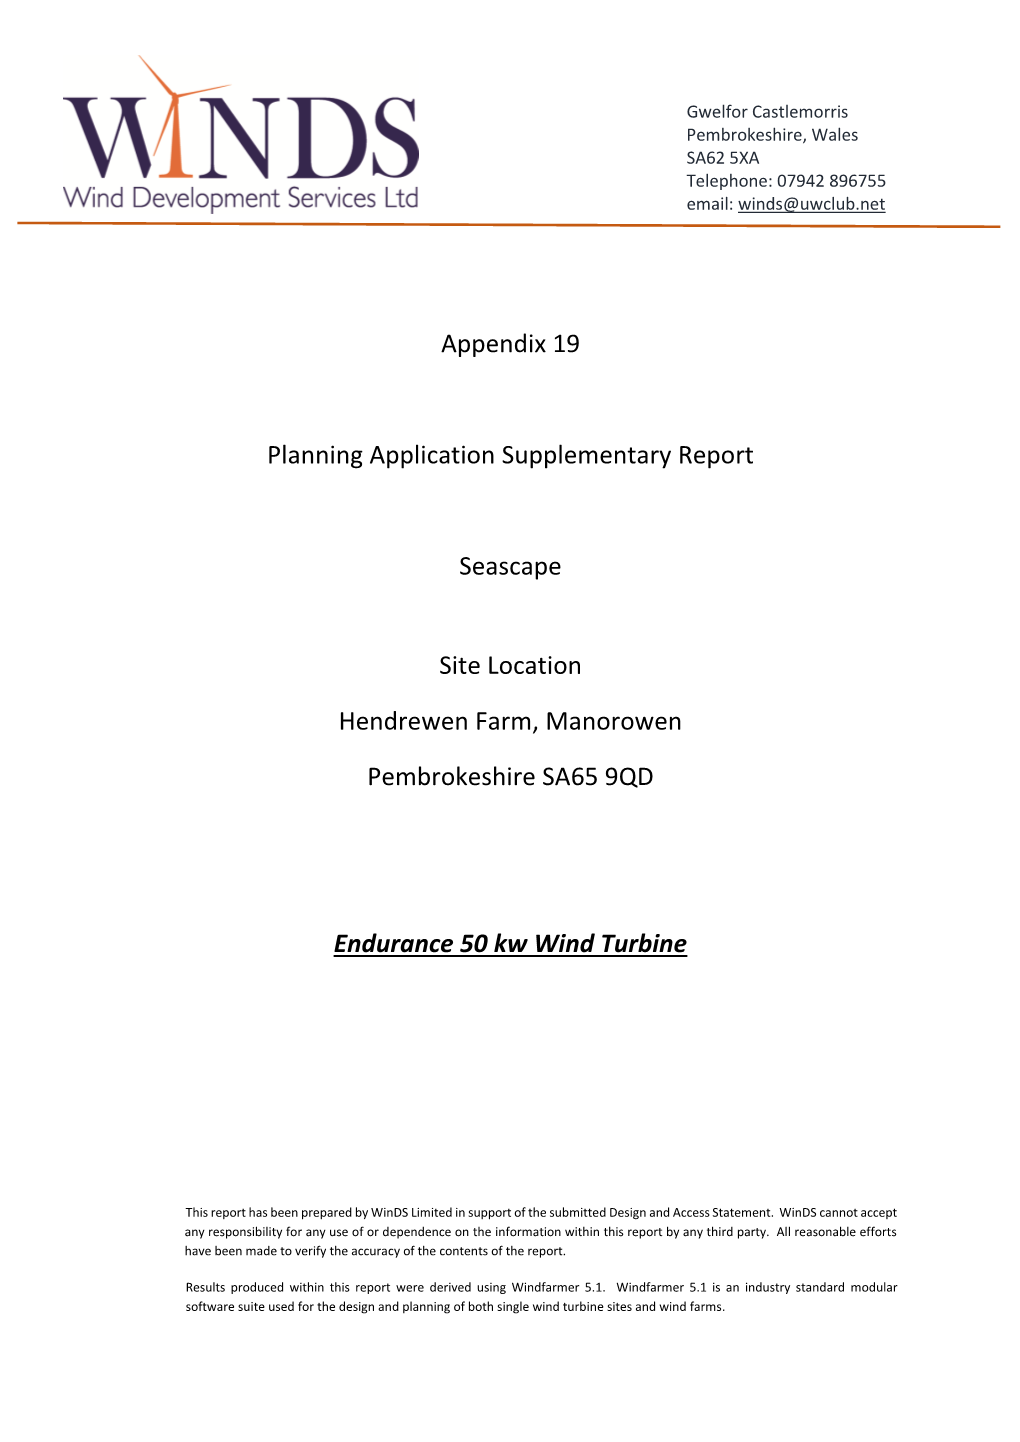 Appendix 19 Planning Application Supplementary Report Seascape